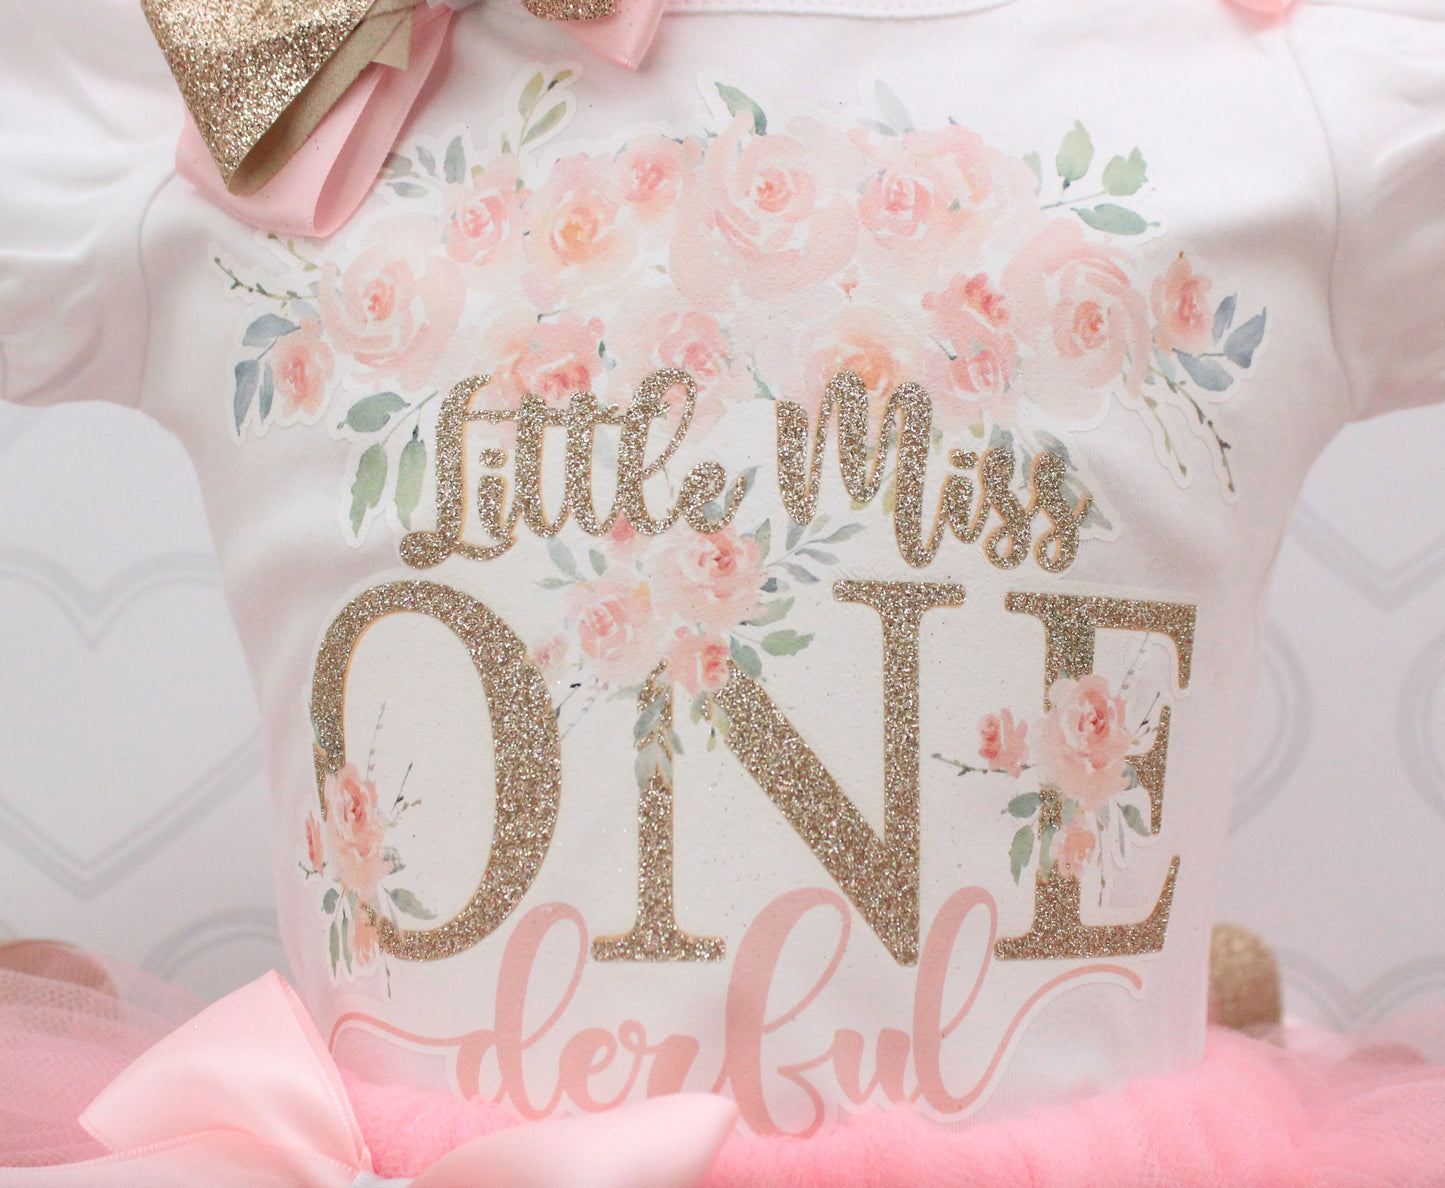 Little Miss Onederful Tutu set- Little Miss Onederful outfit- Little Miss Onederful tutu-Little Miss Onederful  tutu set